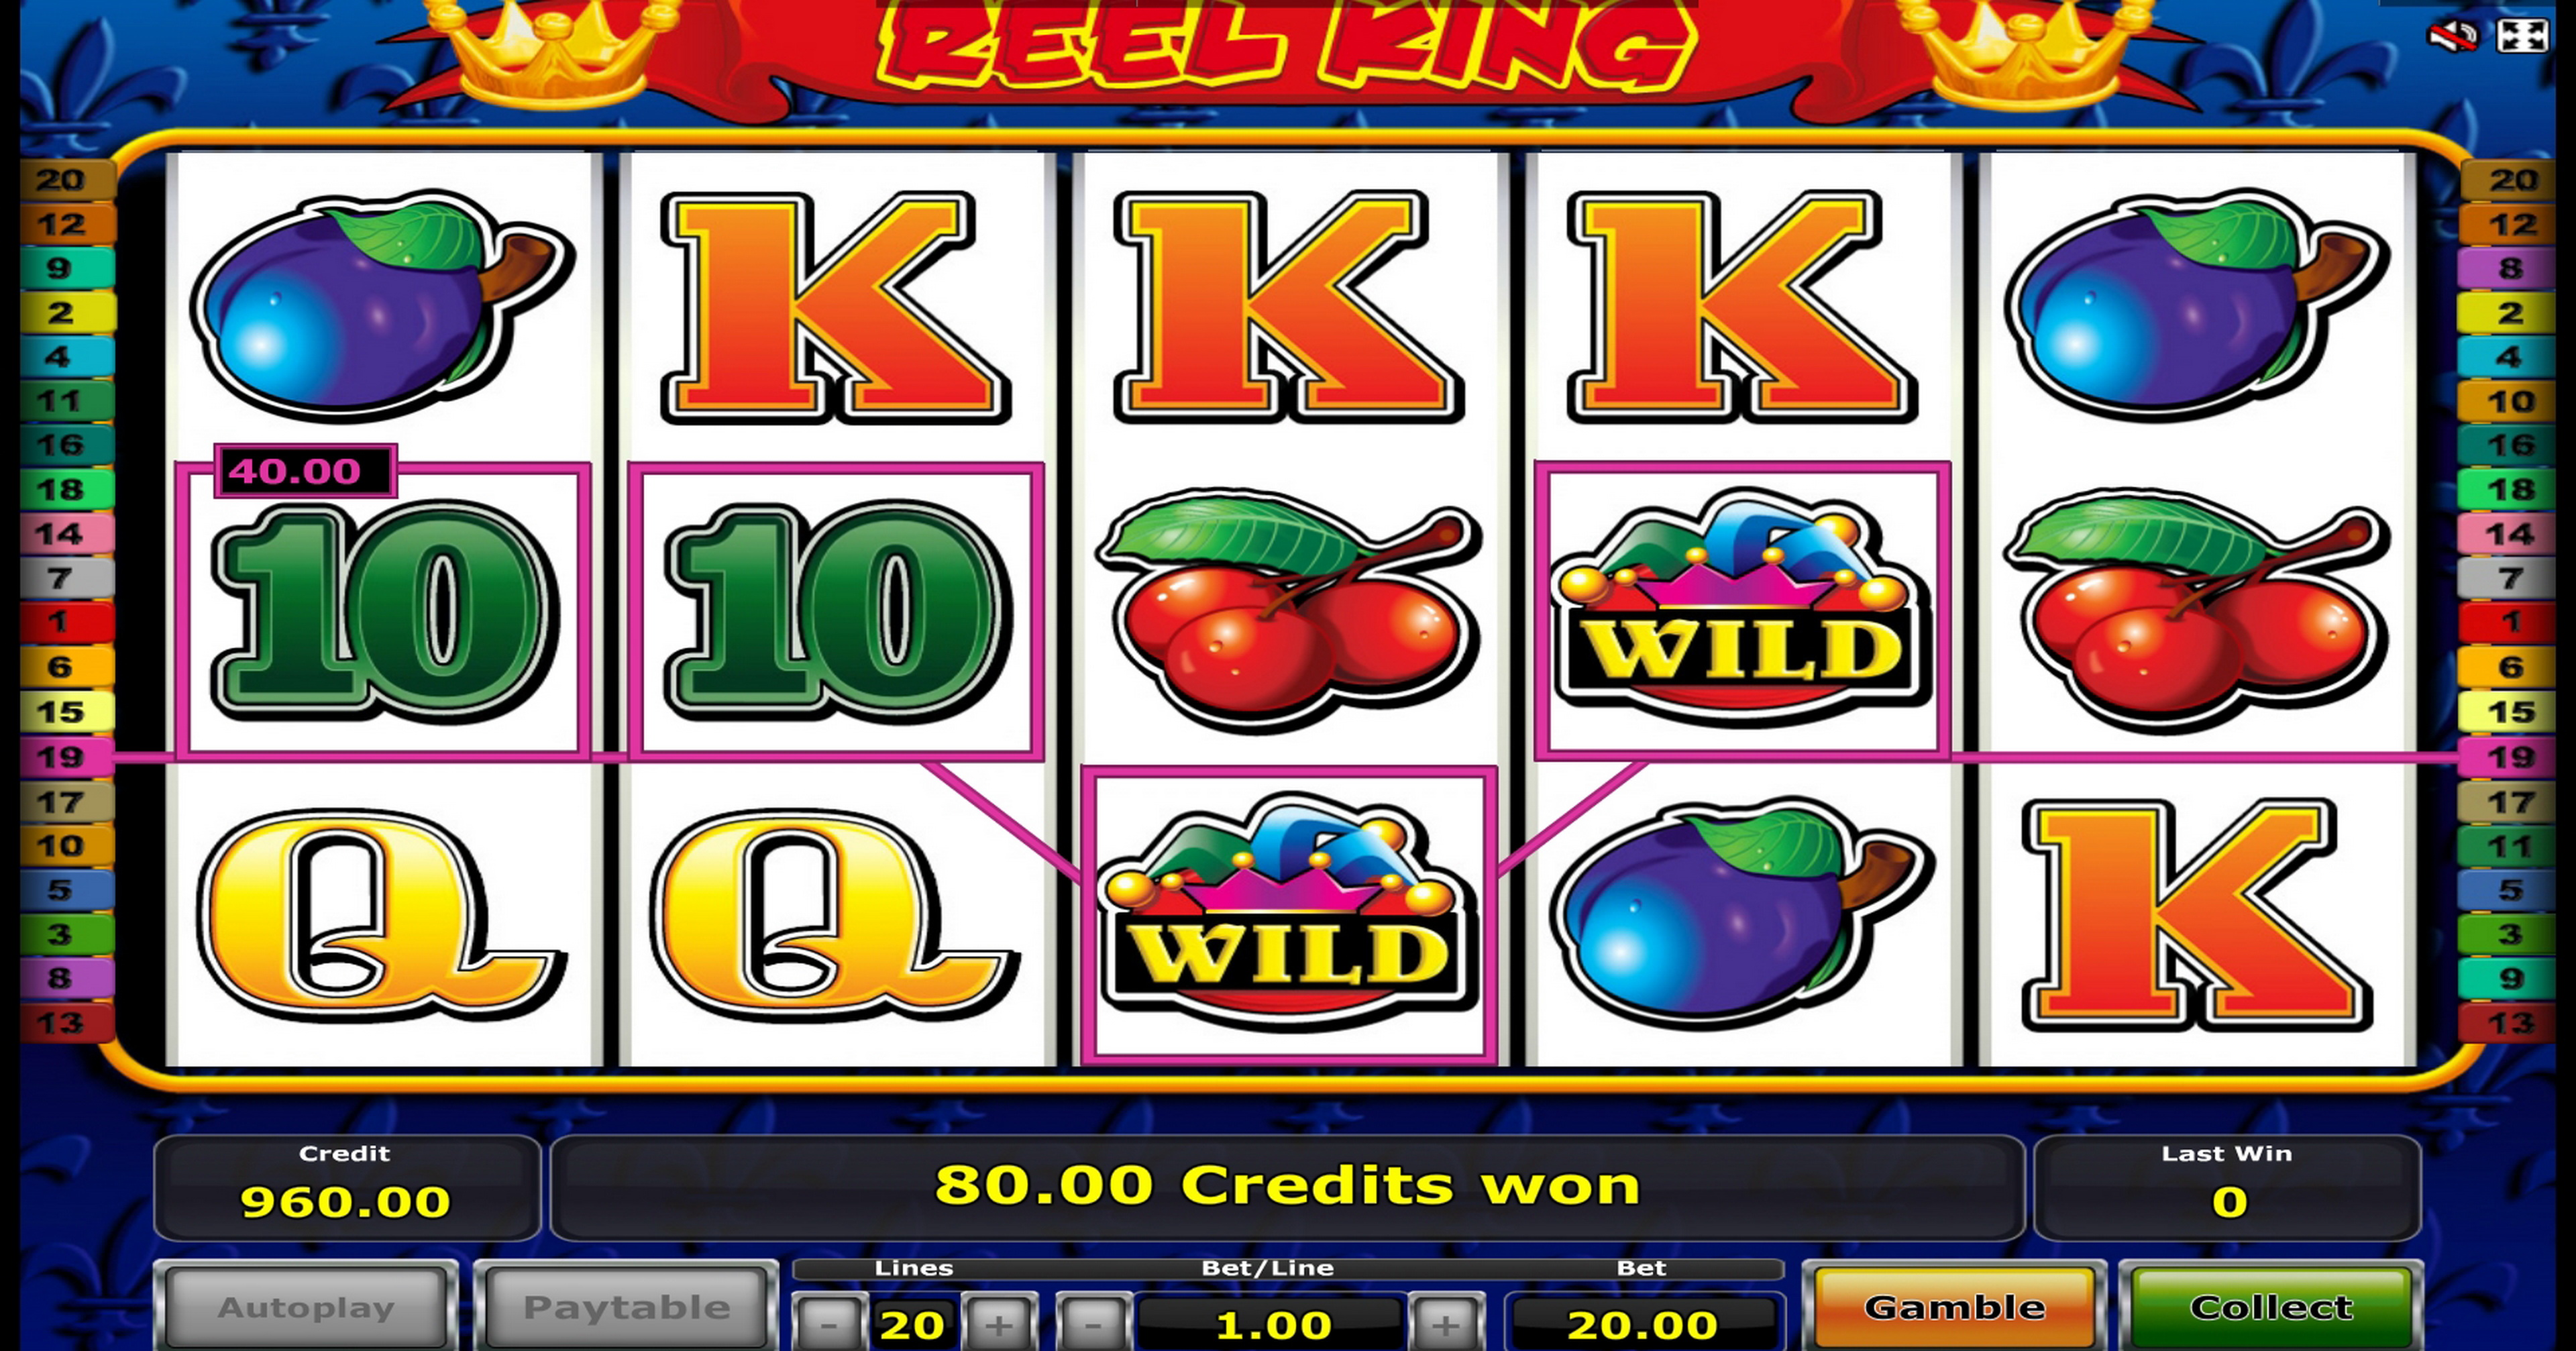 Win Money in Reel King Free Slot Game by Greentube